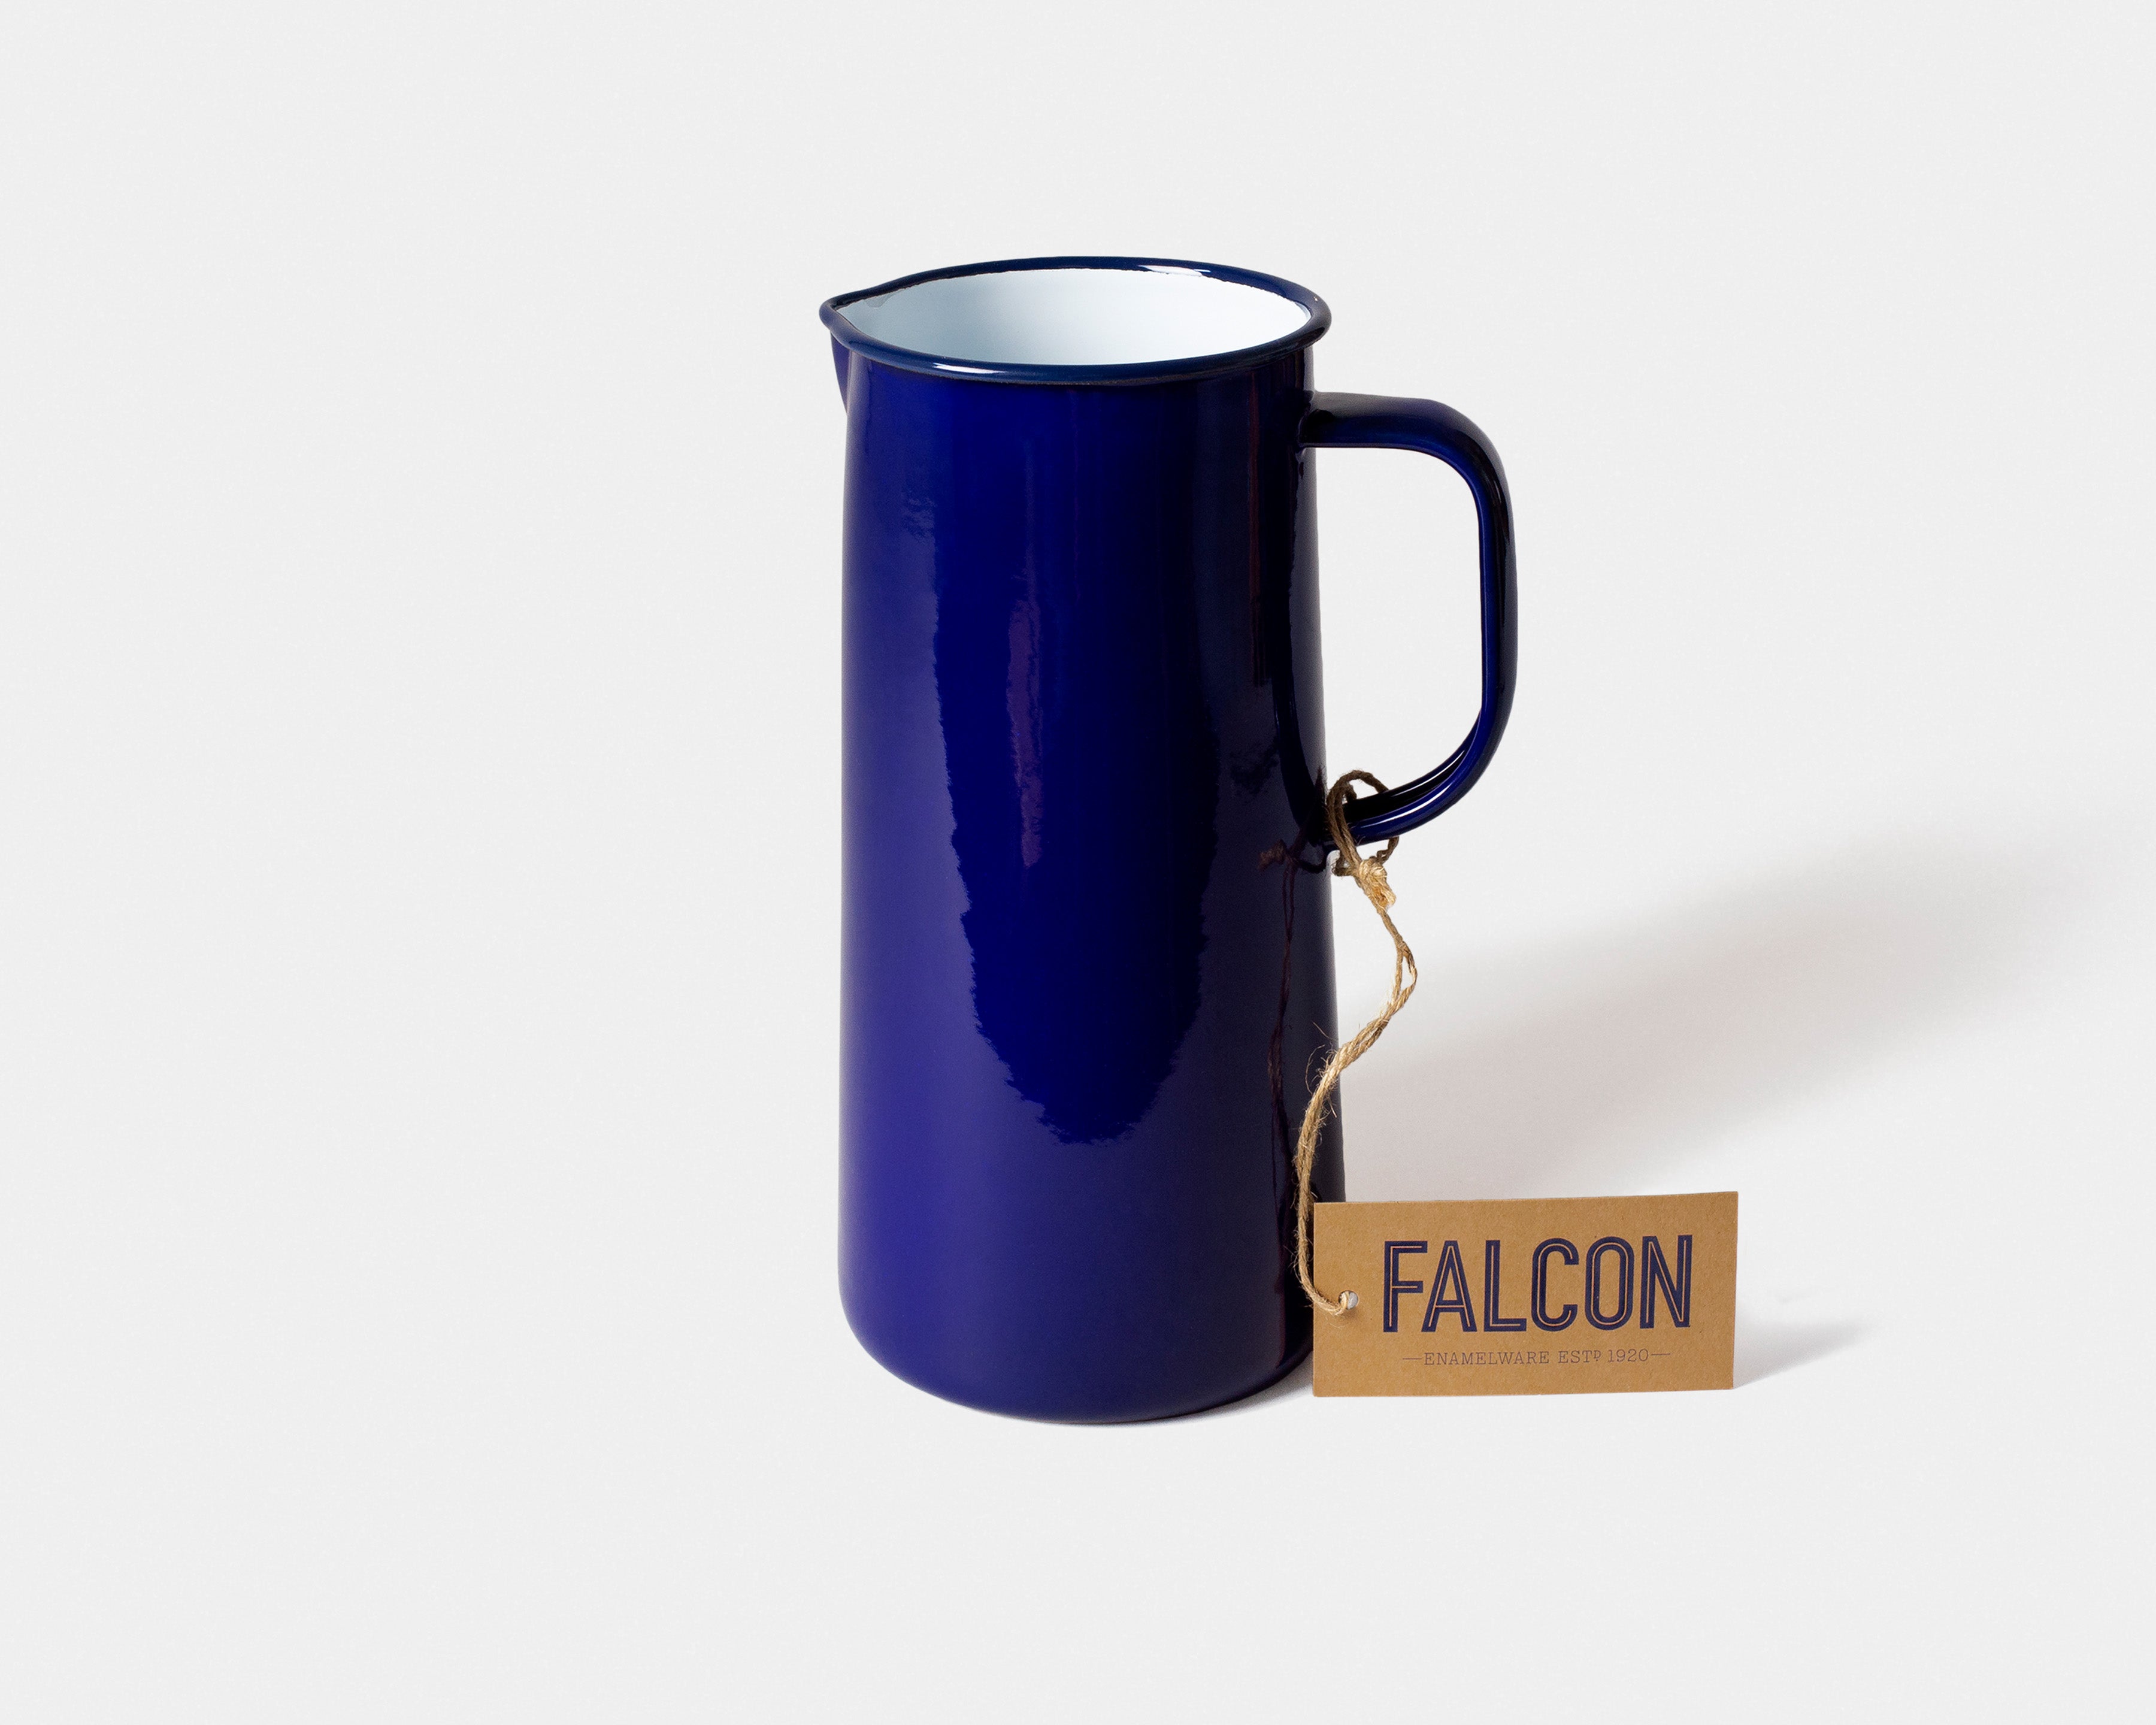 Falcon Enamelware – Riveted